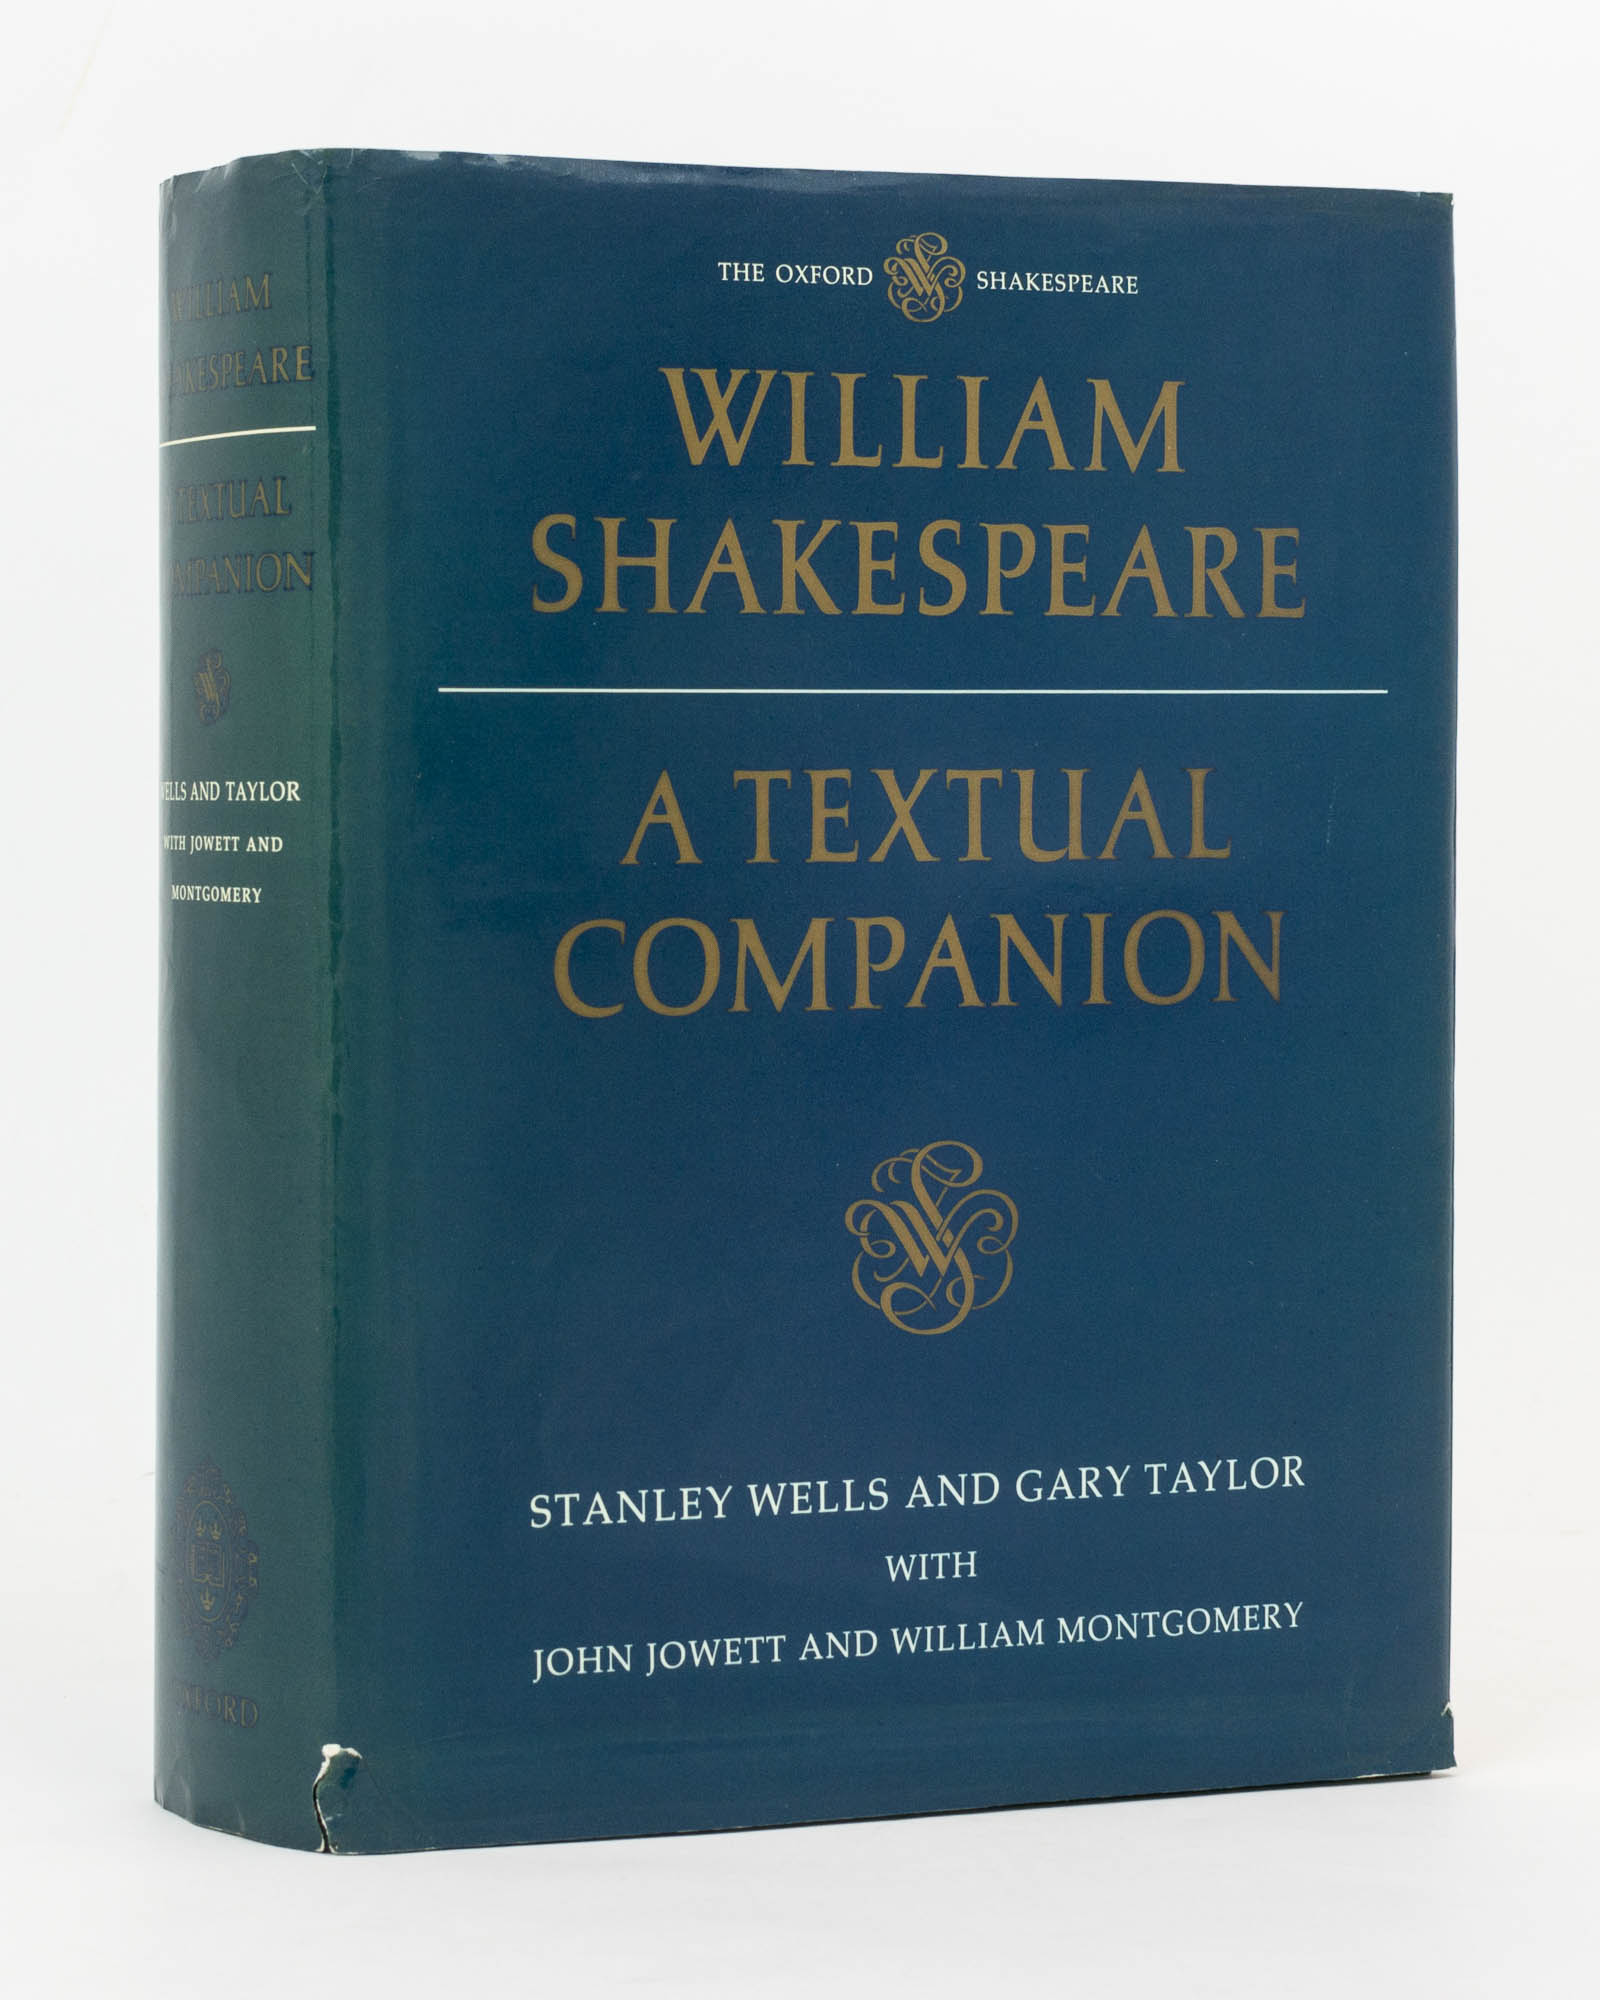 William Shakespeare. A Textual Companion - [SHAKESPEARE, William] WELLS, Stanley, Gary TAYLOR, John JOWETT and William MONTGOMERY